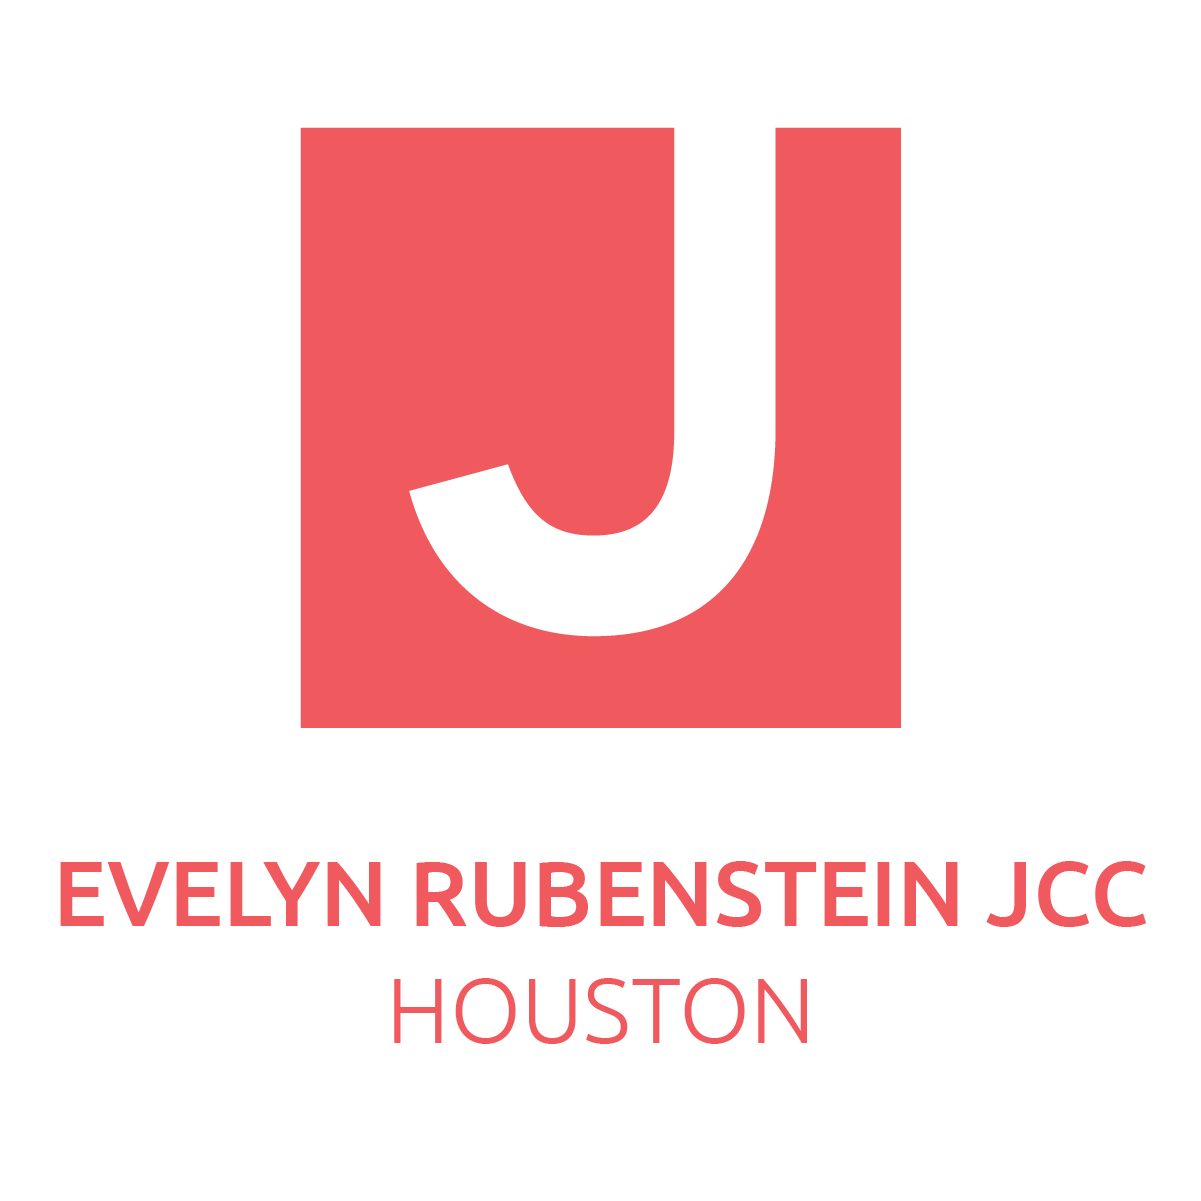 Evelyn Rubenstein JCC Houston